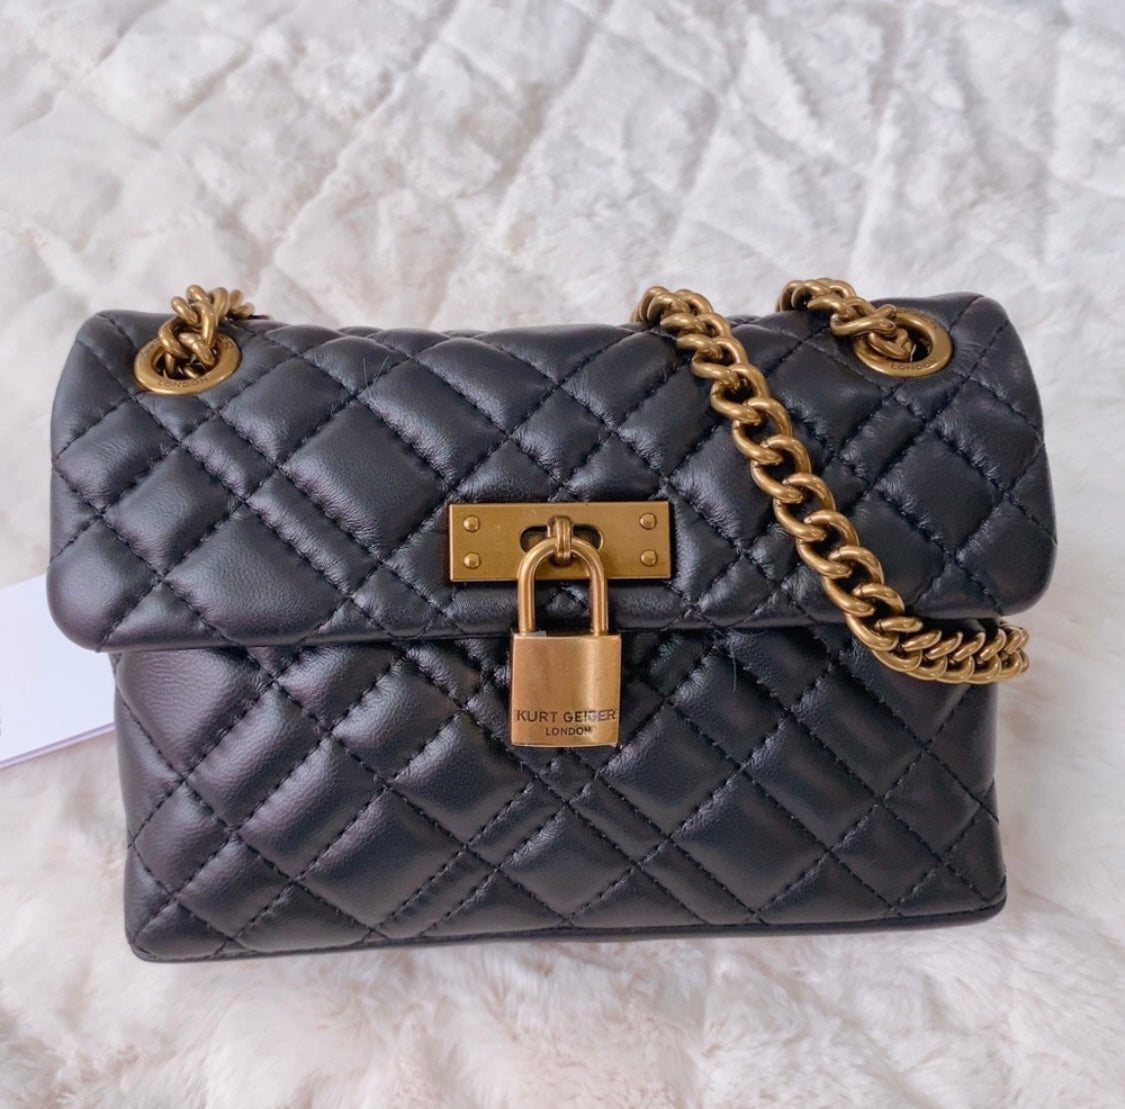 Kurt Geiger London Women's Leather Mini Brixton Lock Bag Black